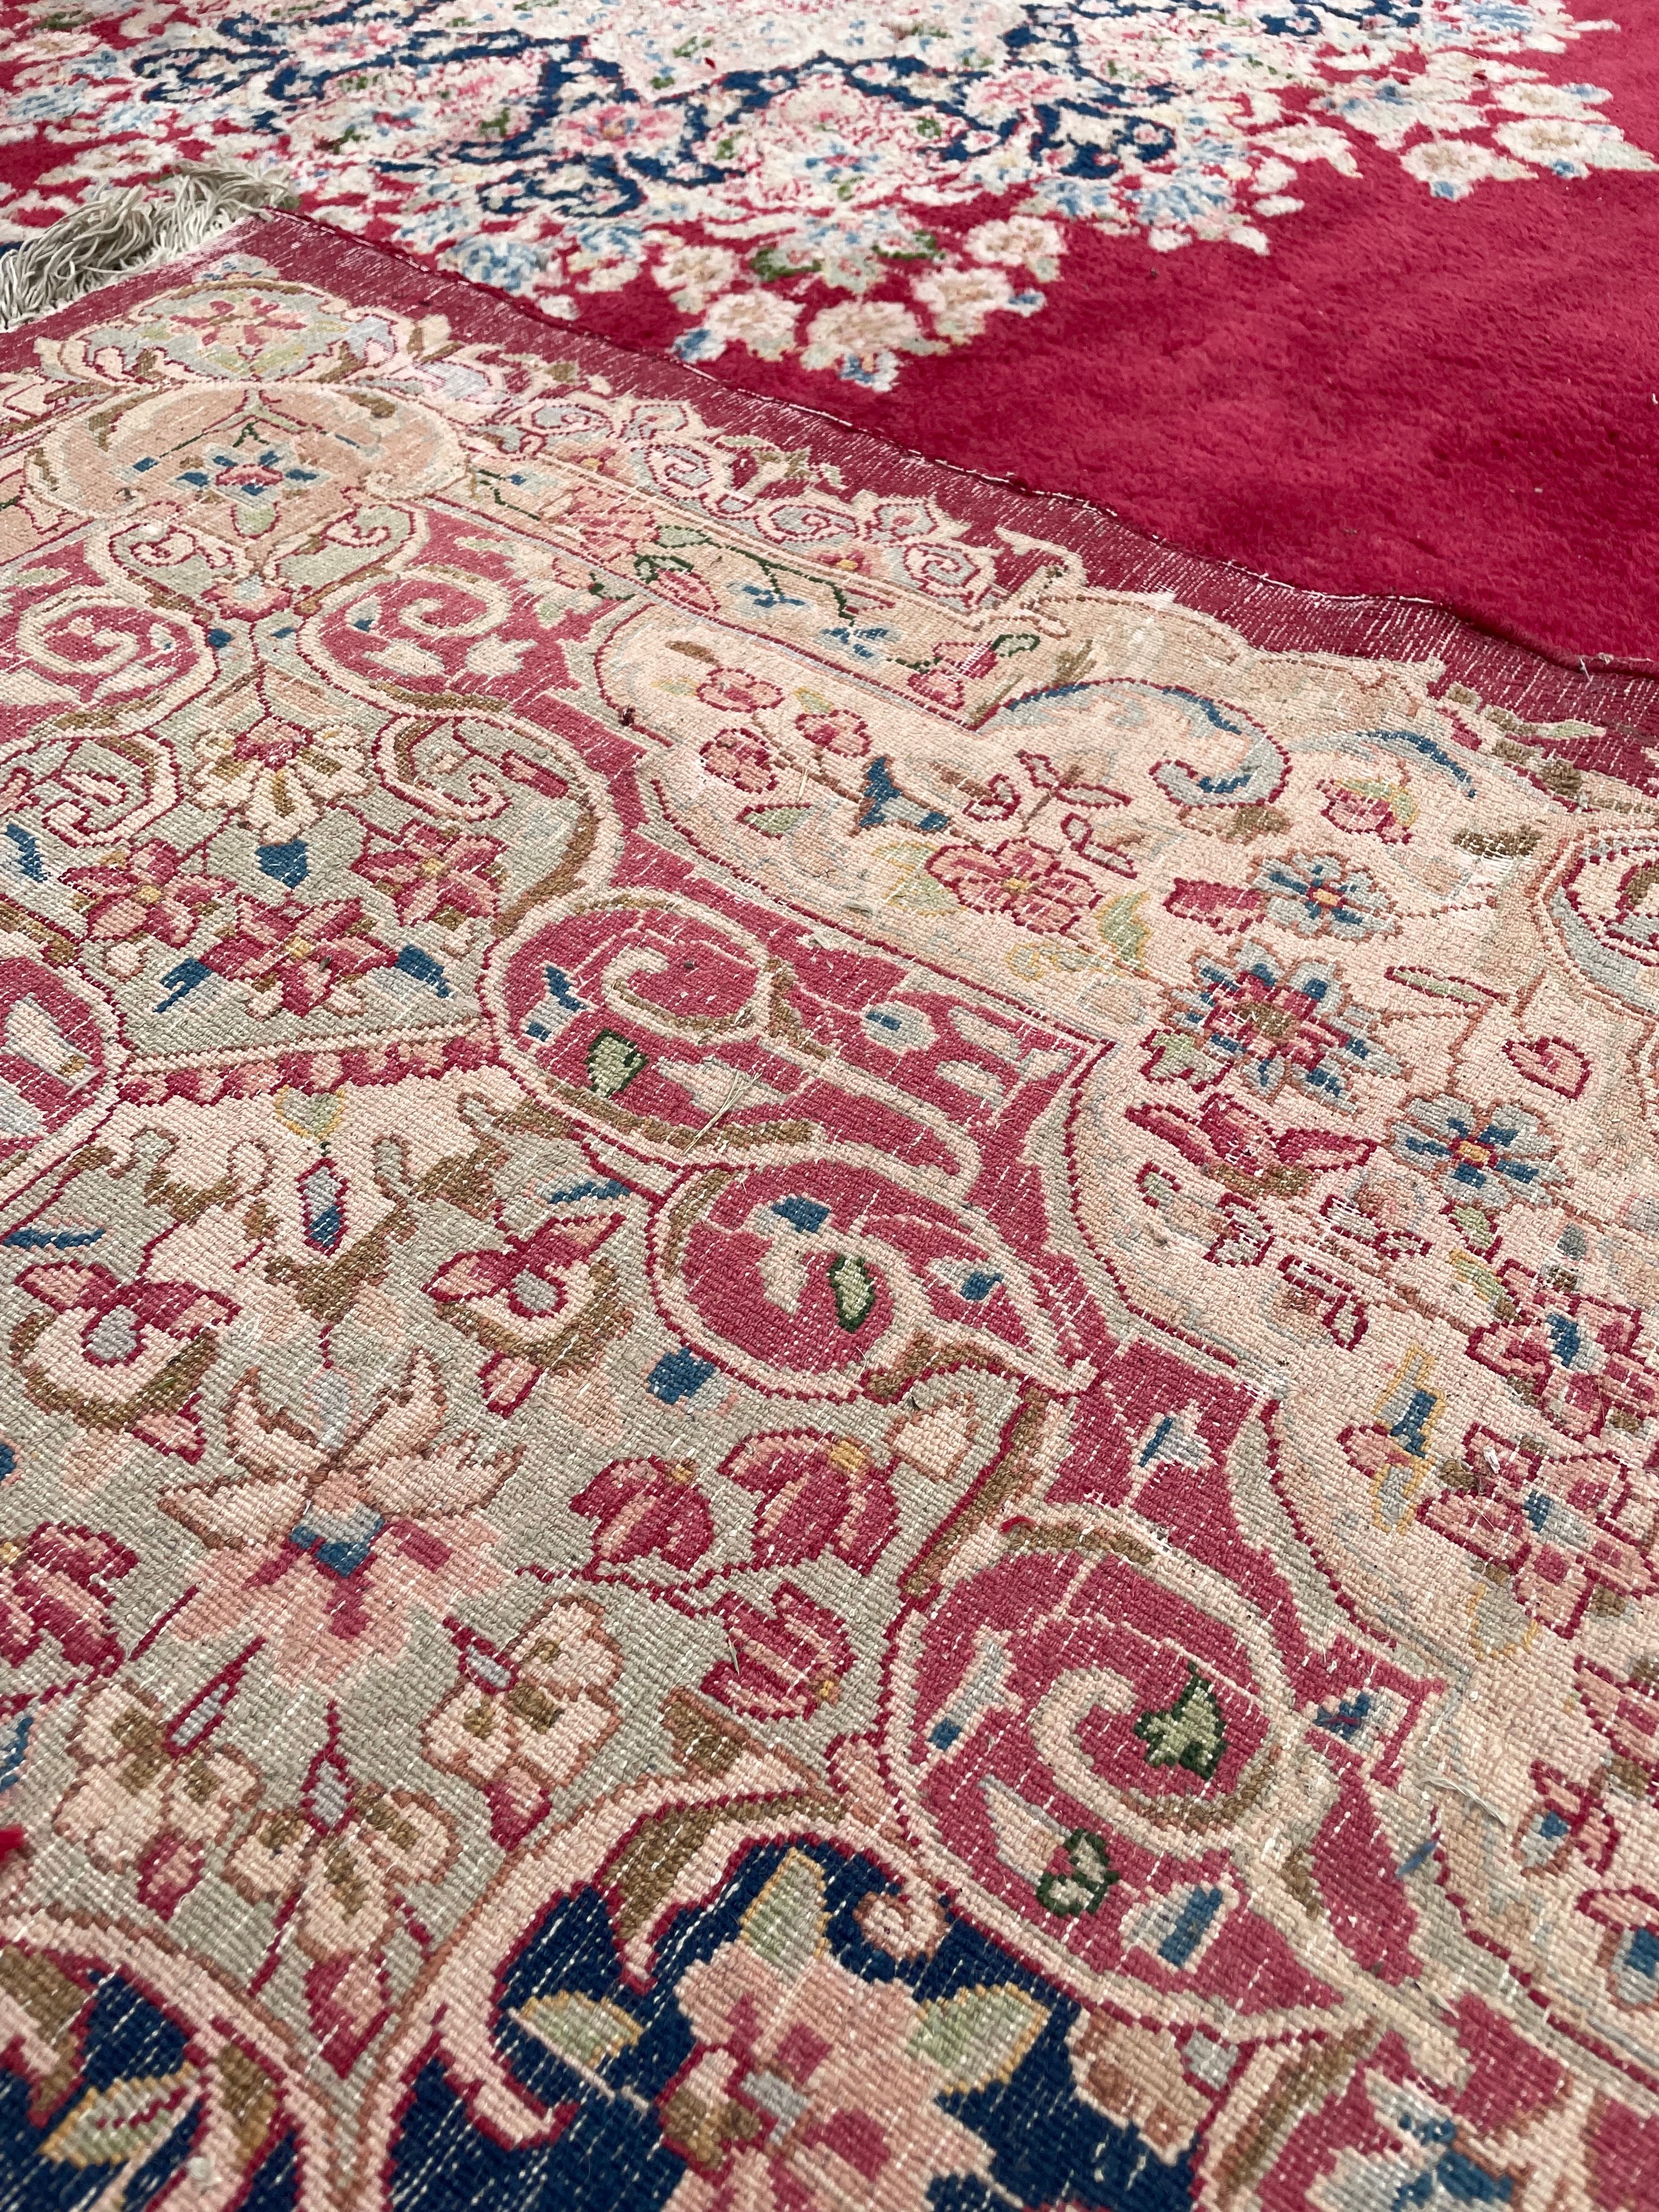 Large red ground Kerman style carpet, - Image 3 of 3